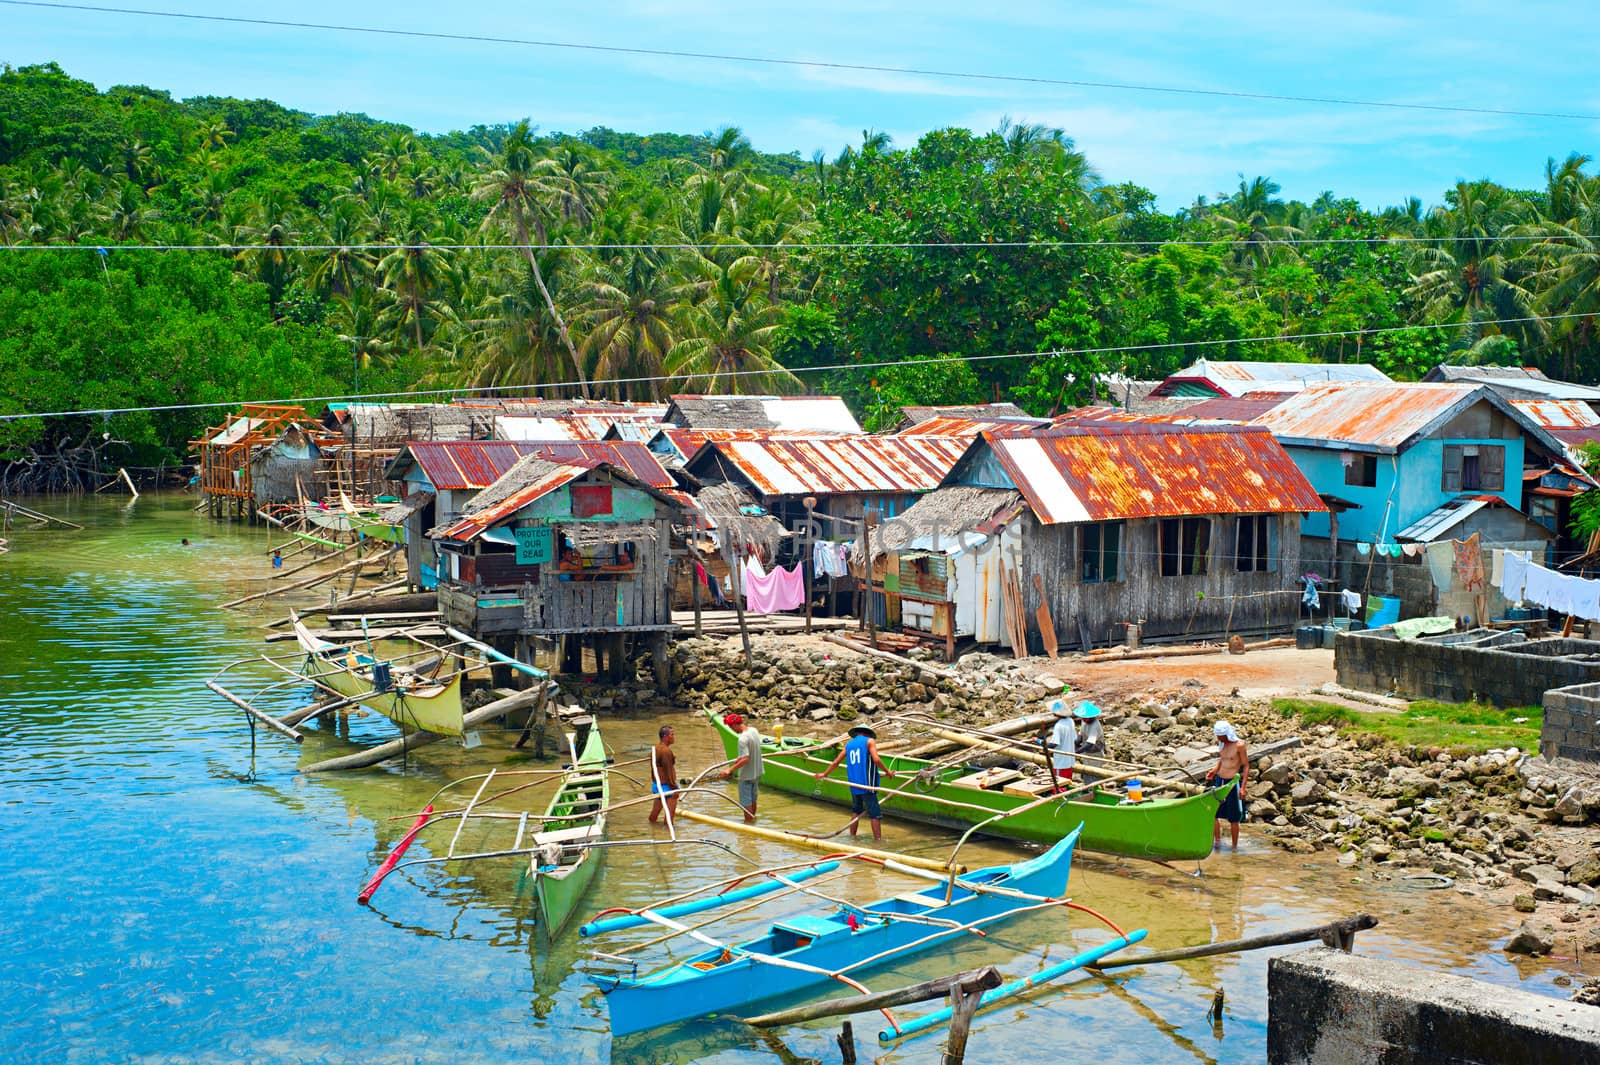 Philippines Fisherman village by joyfull